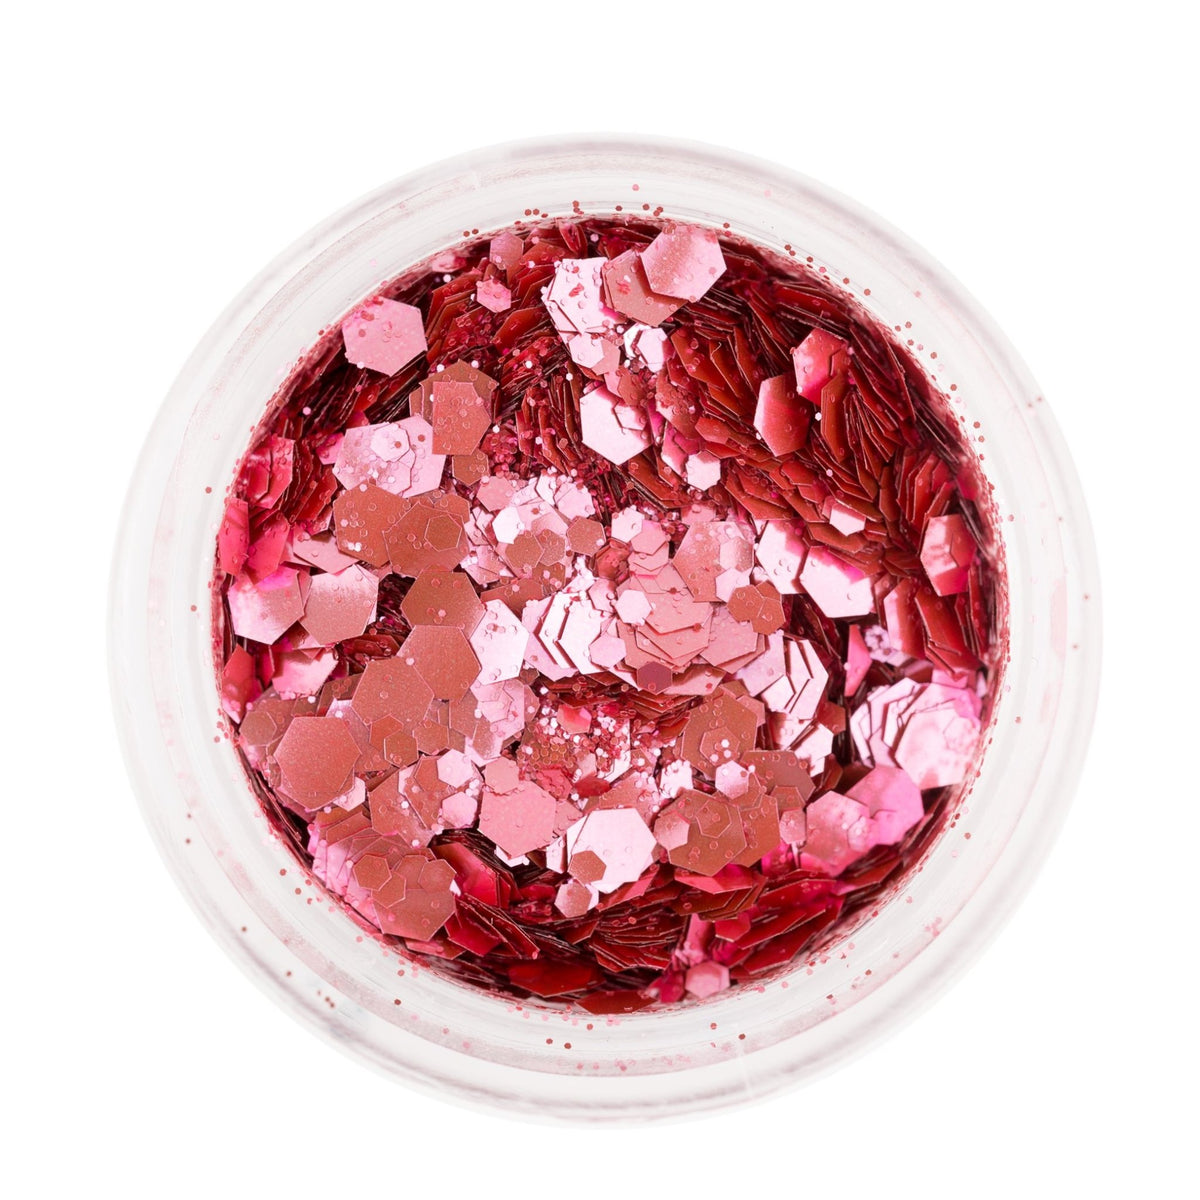 ✨ Rose Biodegradable Glitter! ✨ - Alternative Imagination